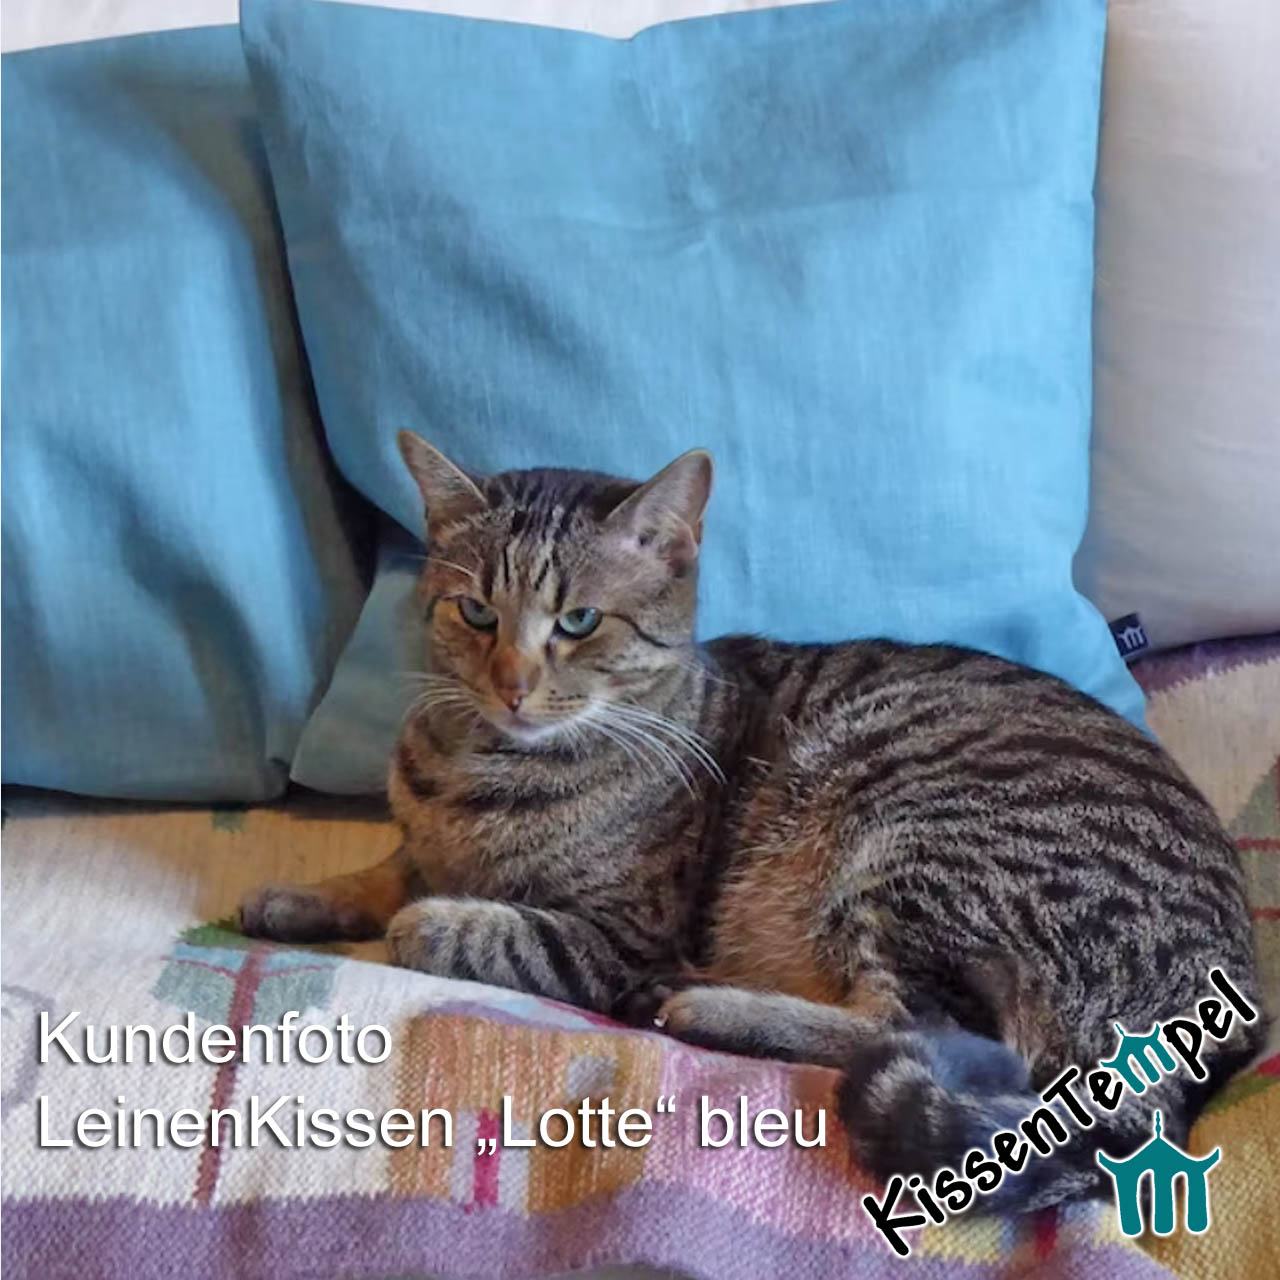 Kissen Lotte bleu Kundenfoto 1